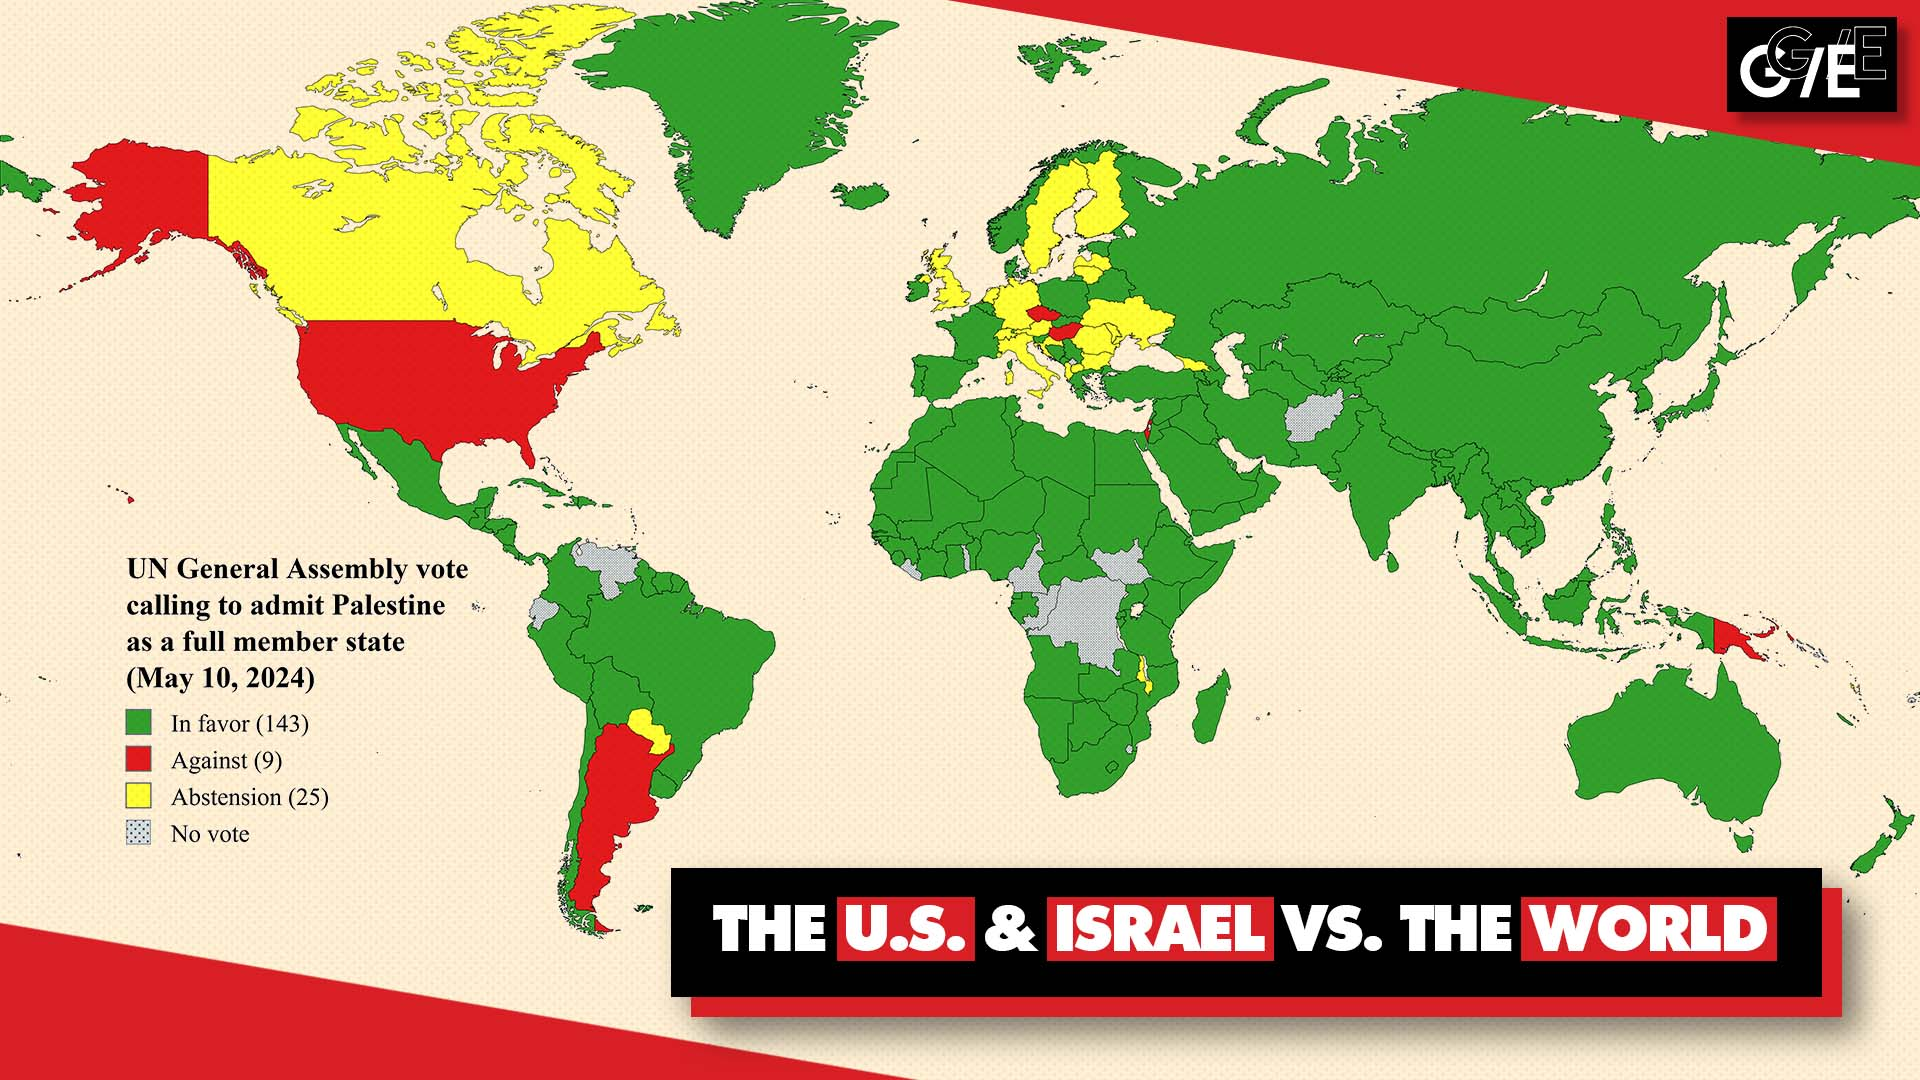 USA & Israel defy world in vote to make Palestine full UN member (Ben Norton, 11 May 2024)